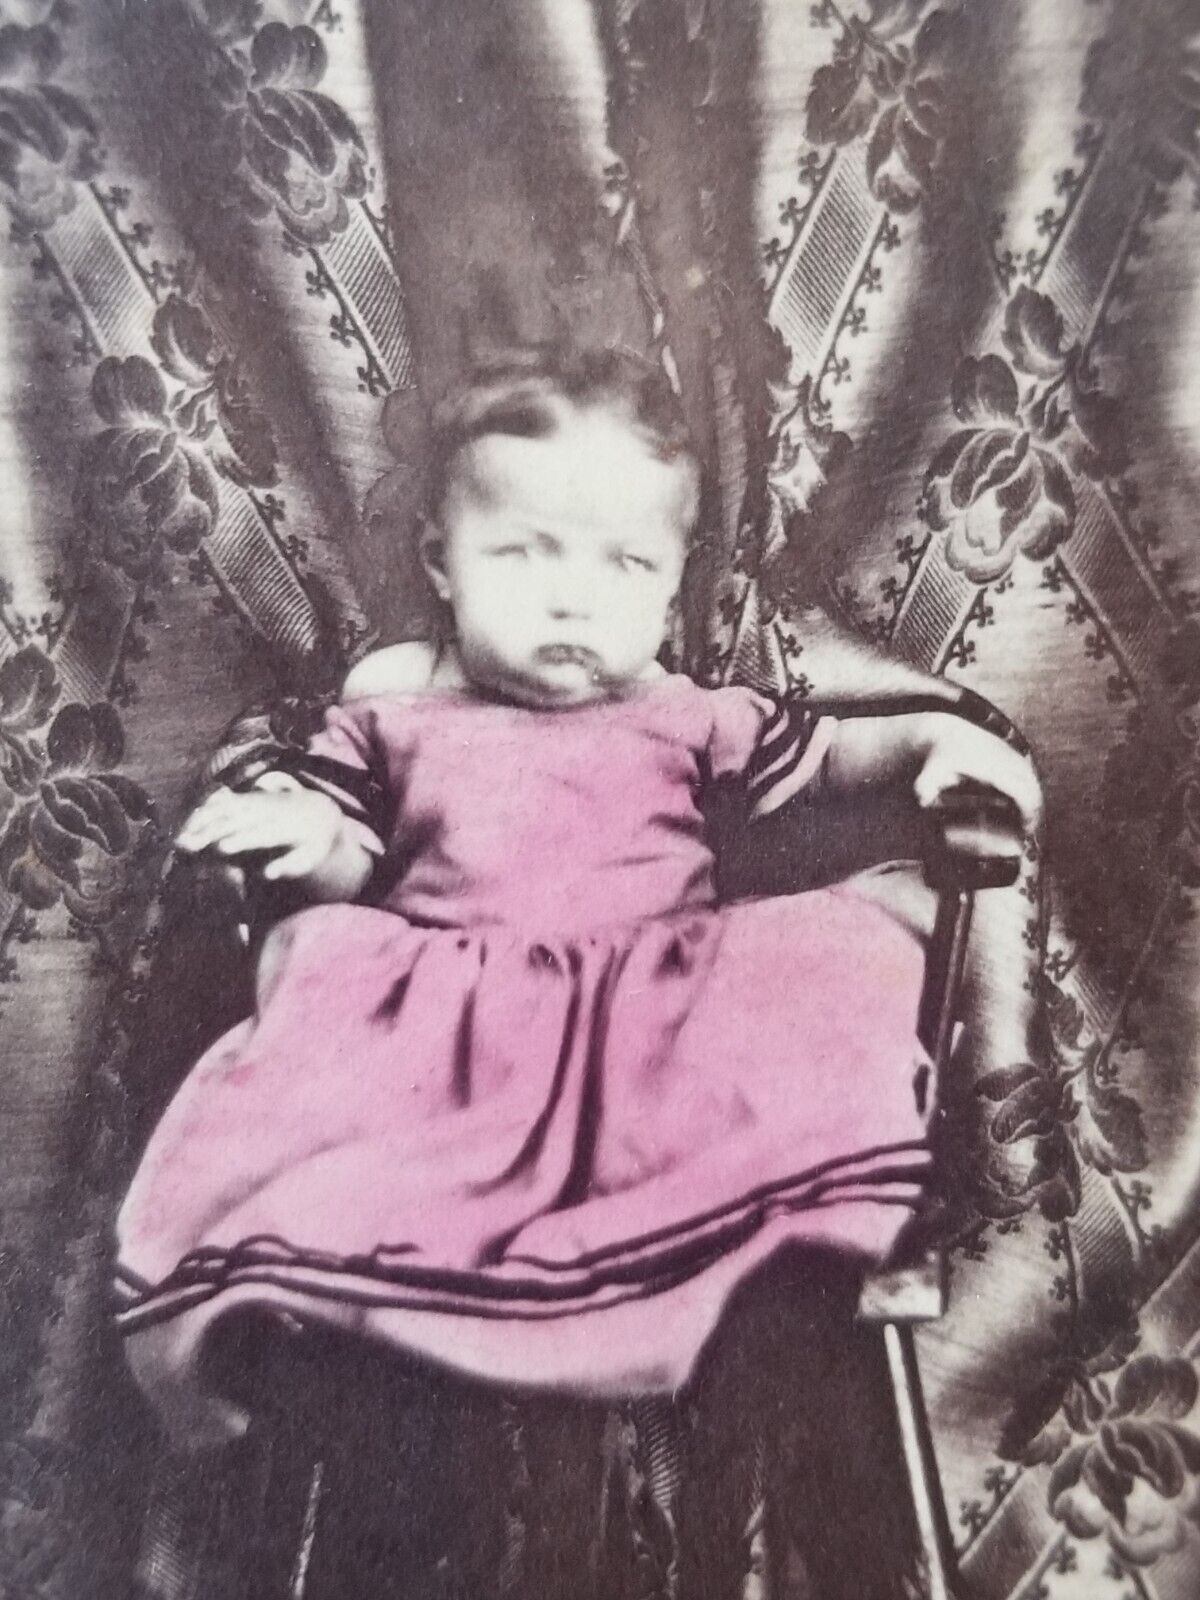  photograph unique odd unusual hand tinted cute girl 1880s